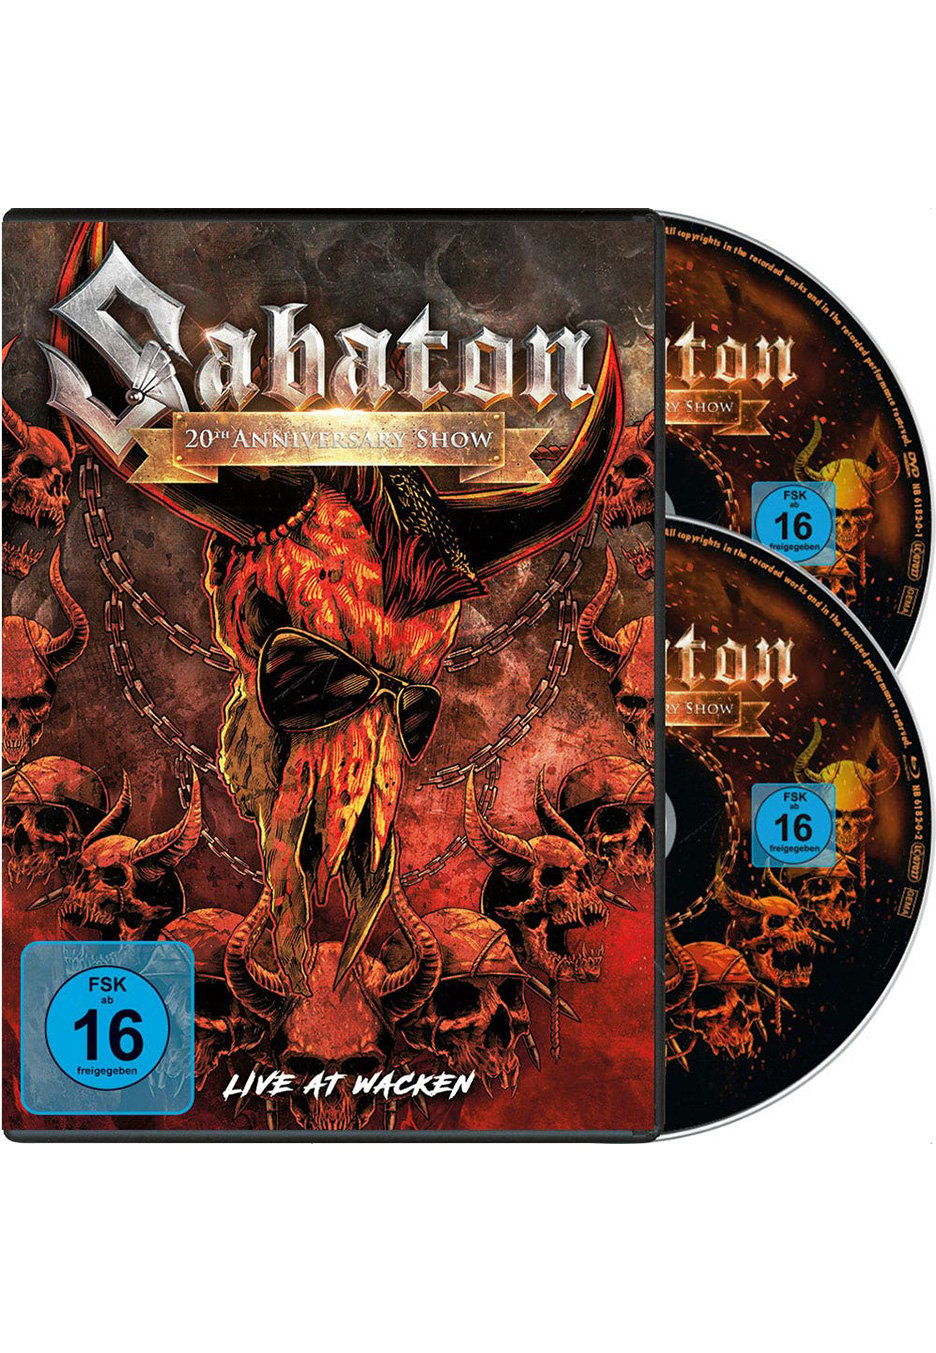 Sabaton - 20Th Anniversary Show - Live At Wacken - Blu Ray + DVD